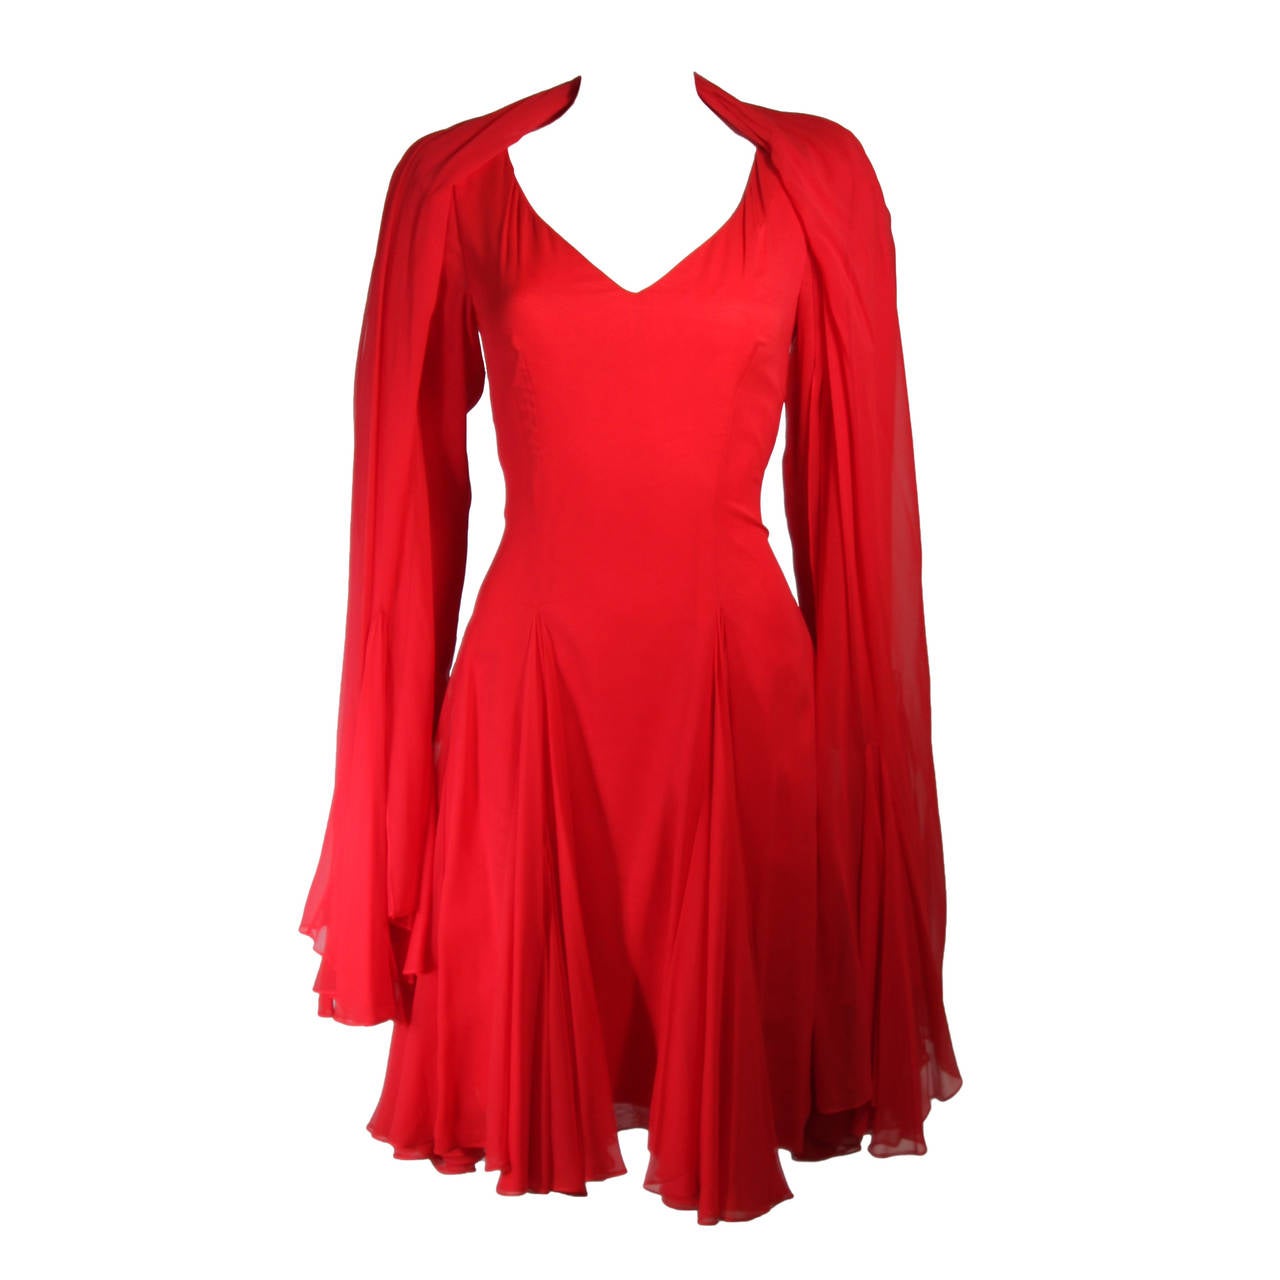 Travilla Red Silk Chiffon Godet Dress with Shawl Size Small Medium For Sale